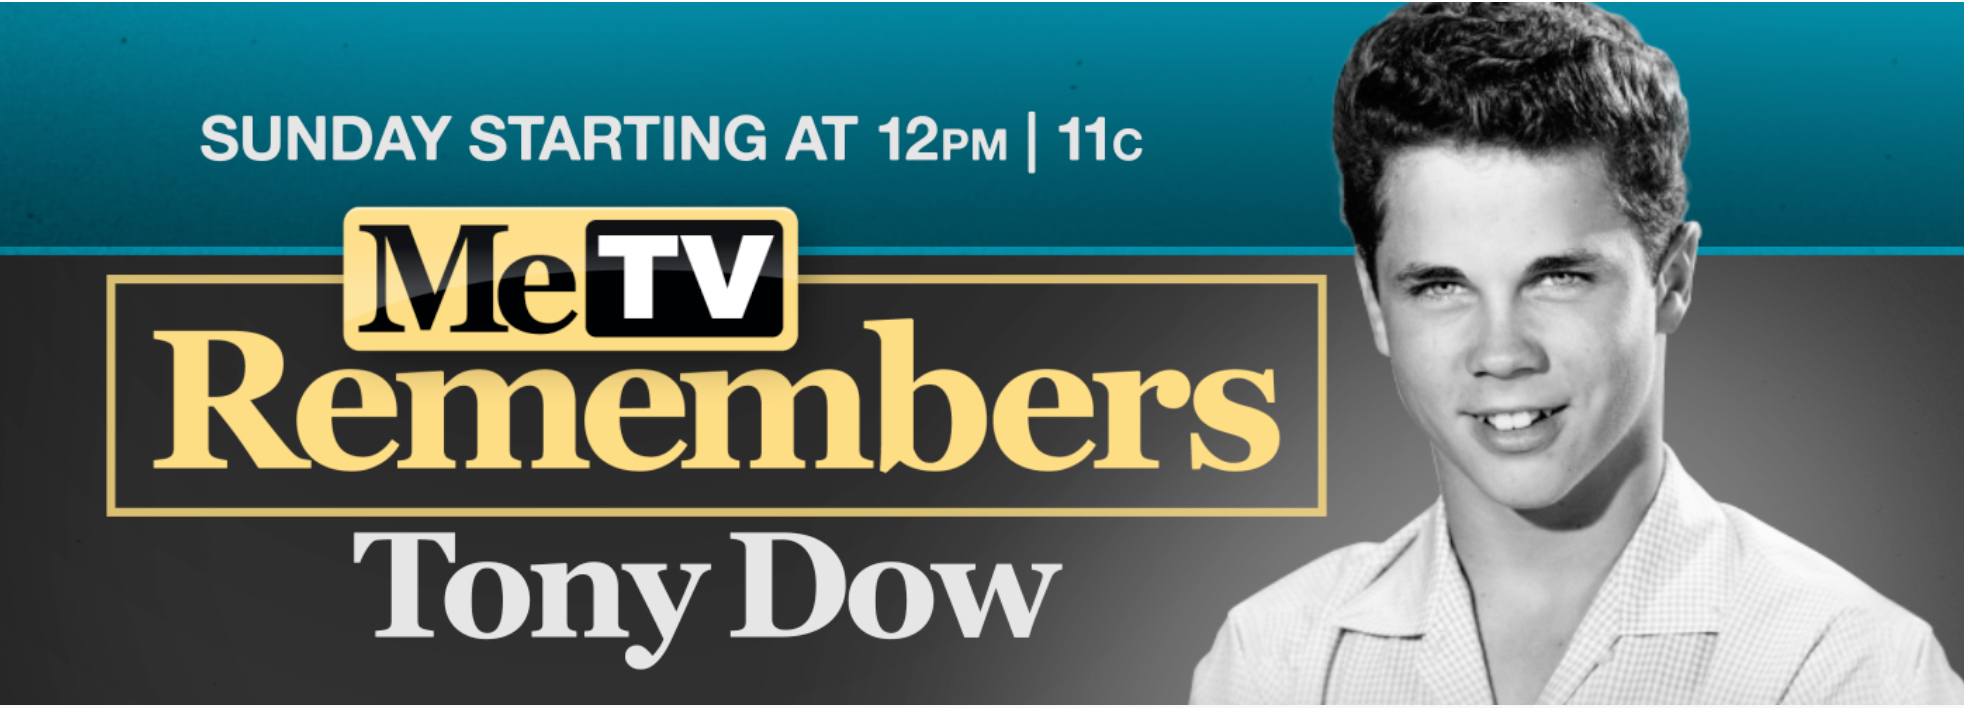 METV Remembers Tony Dow.jpg